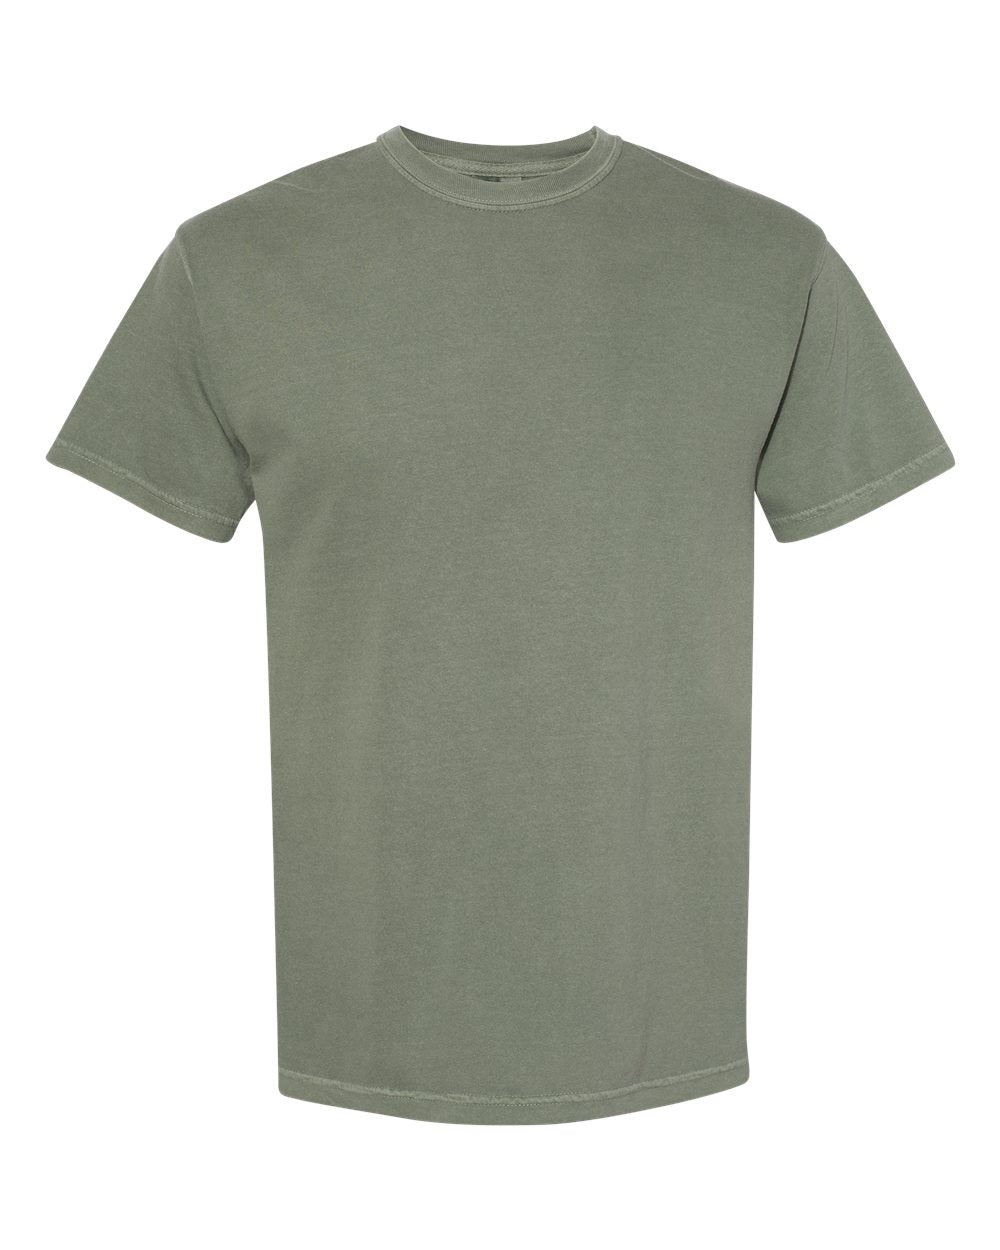 Comfort Colors Heavyweight T-Shirt Size 3XLarge